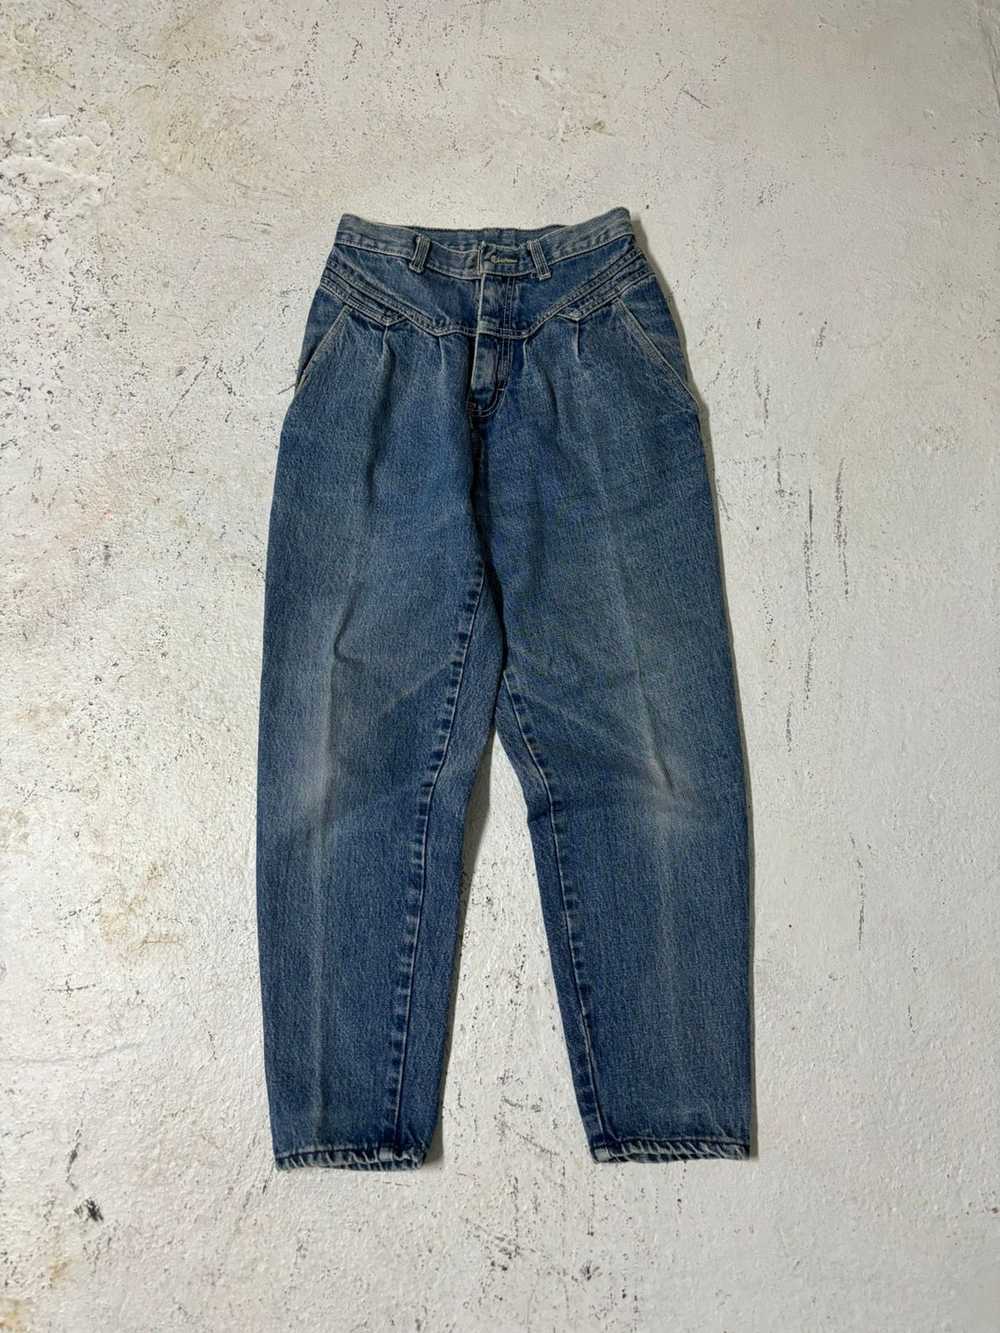 Vintage Vintage 90s gitano jeans - image 1